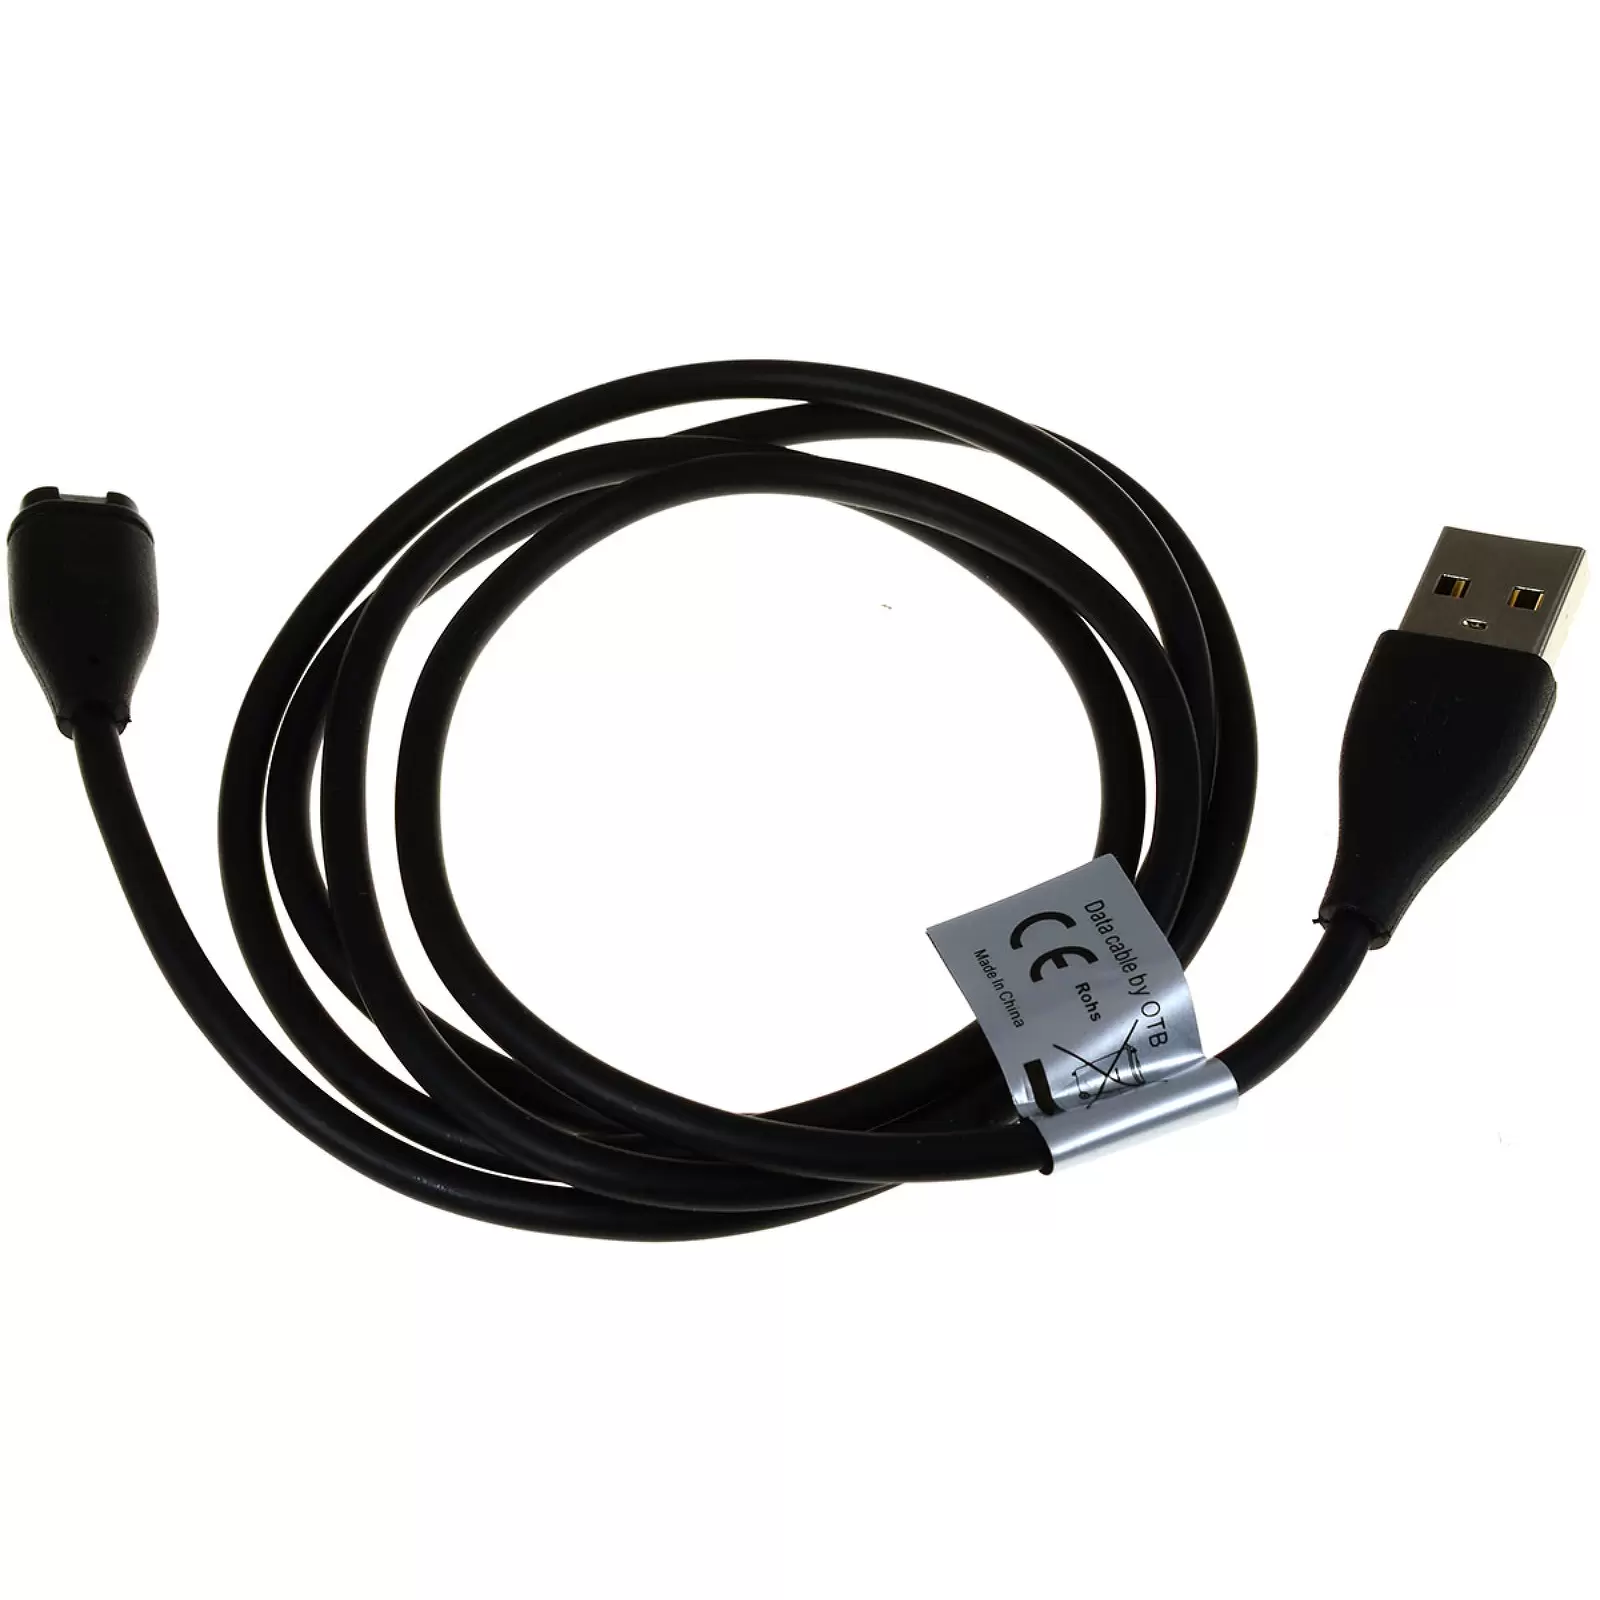 USB-Ladekabel / Datenkabel für Garmin Fenix 5 / Forerunner 935 / Approach S10 / S60 u.v.m.